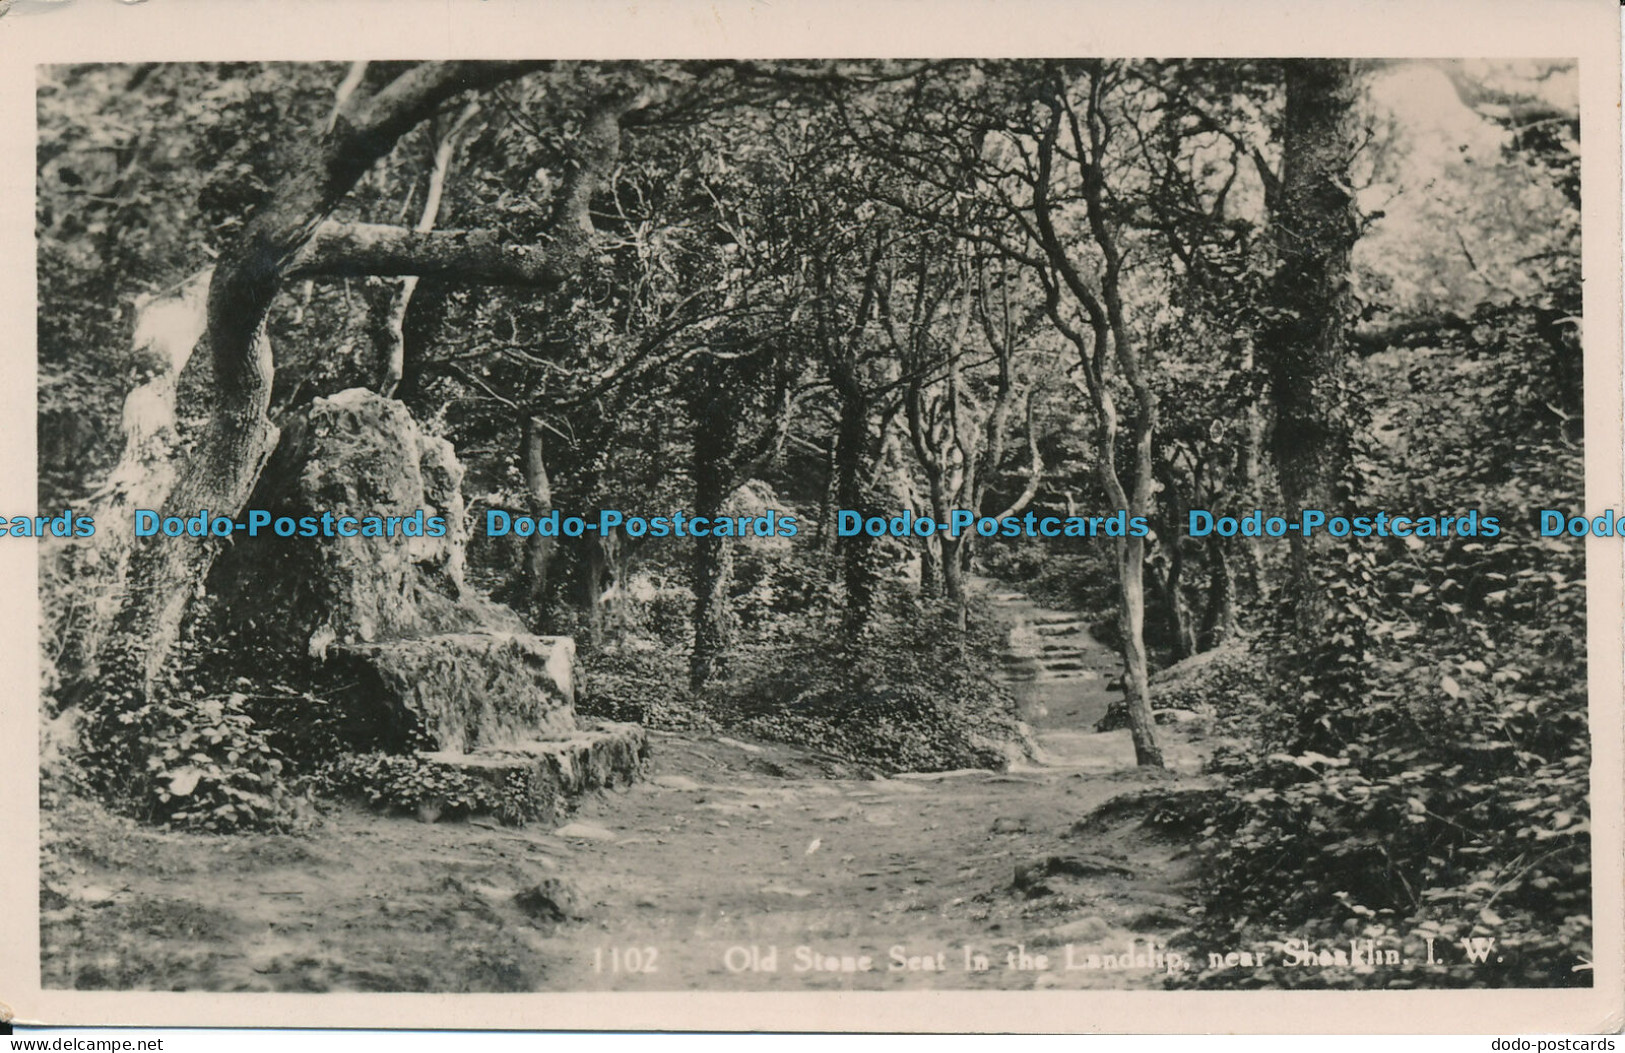 R009450 Old Stone Seat In The Landslip Near Shanklin. I. W. Nigh. RP. 1946 - Monde